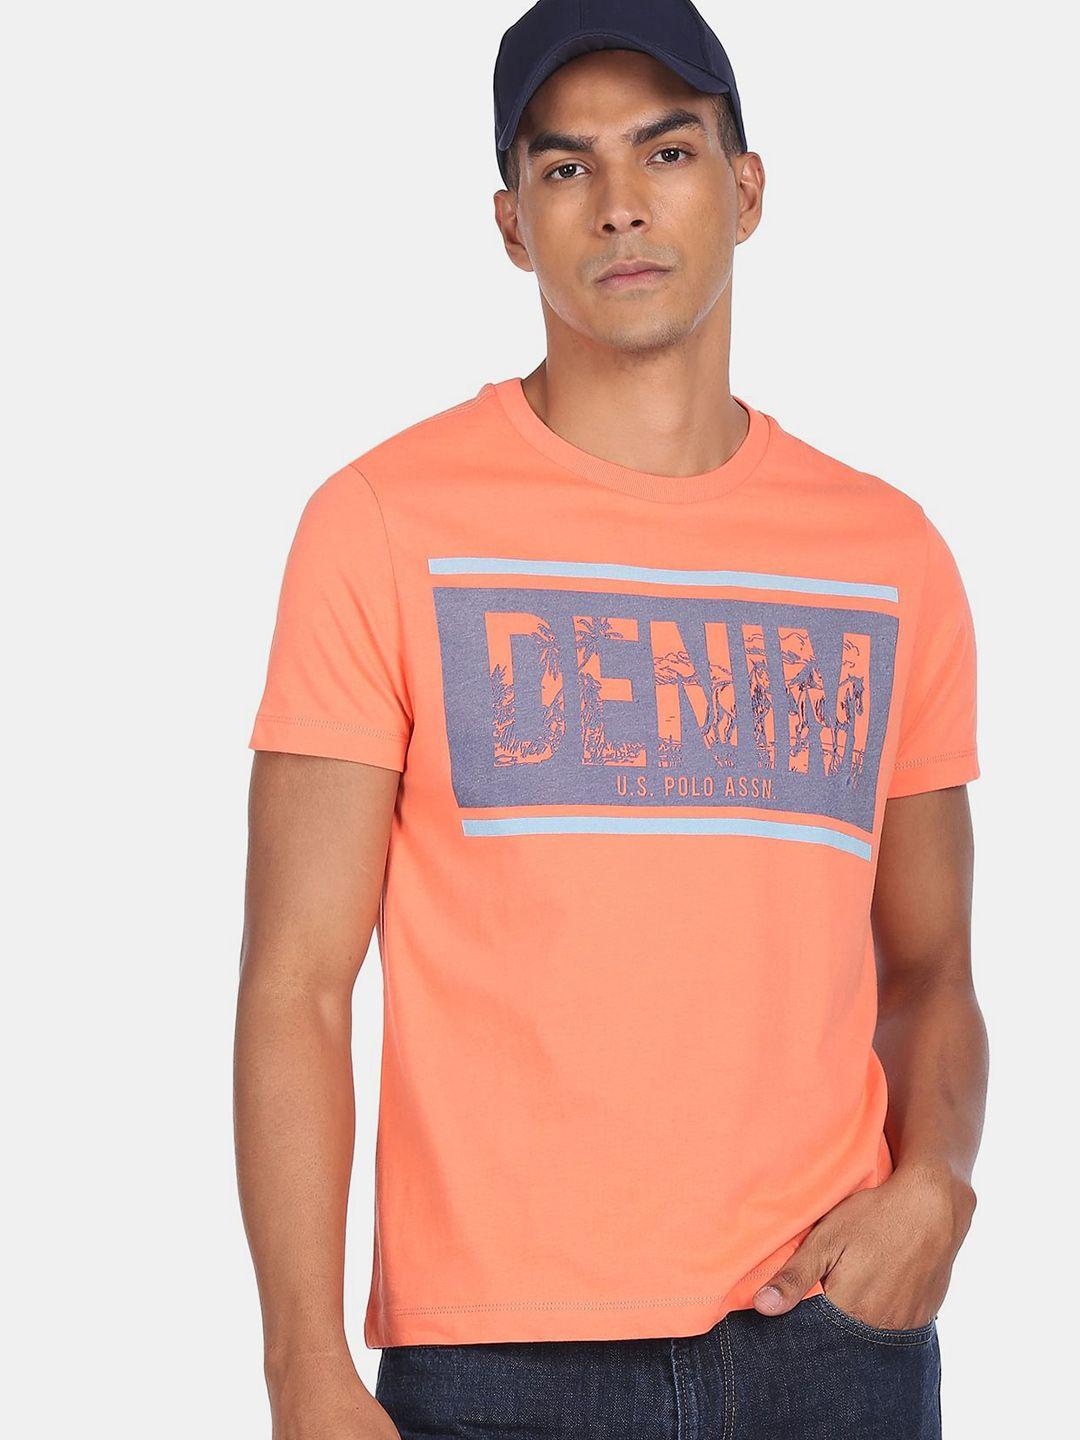 u.s. polo assn. denim co.men orange printed cotton t-shirt